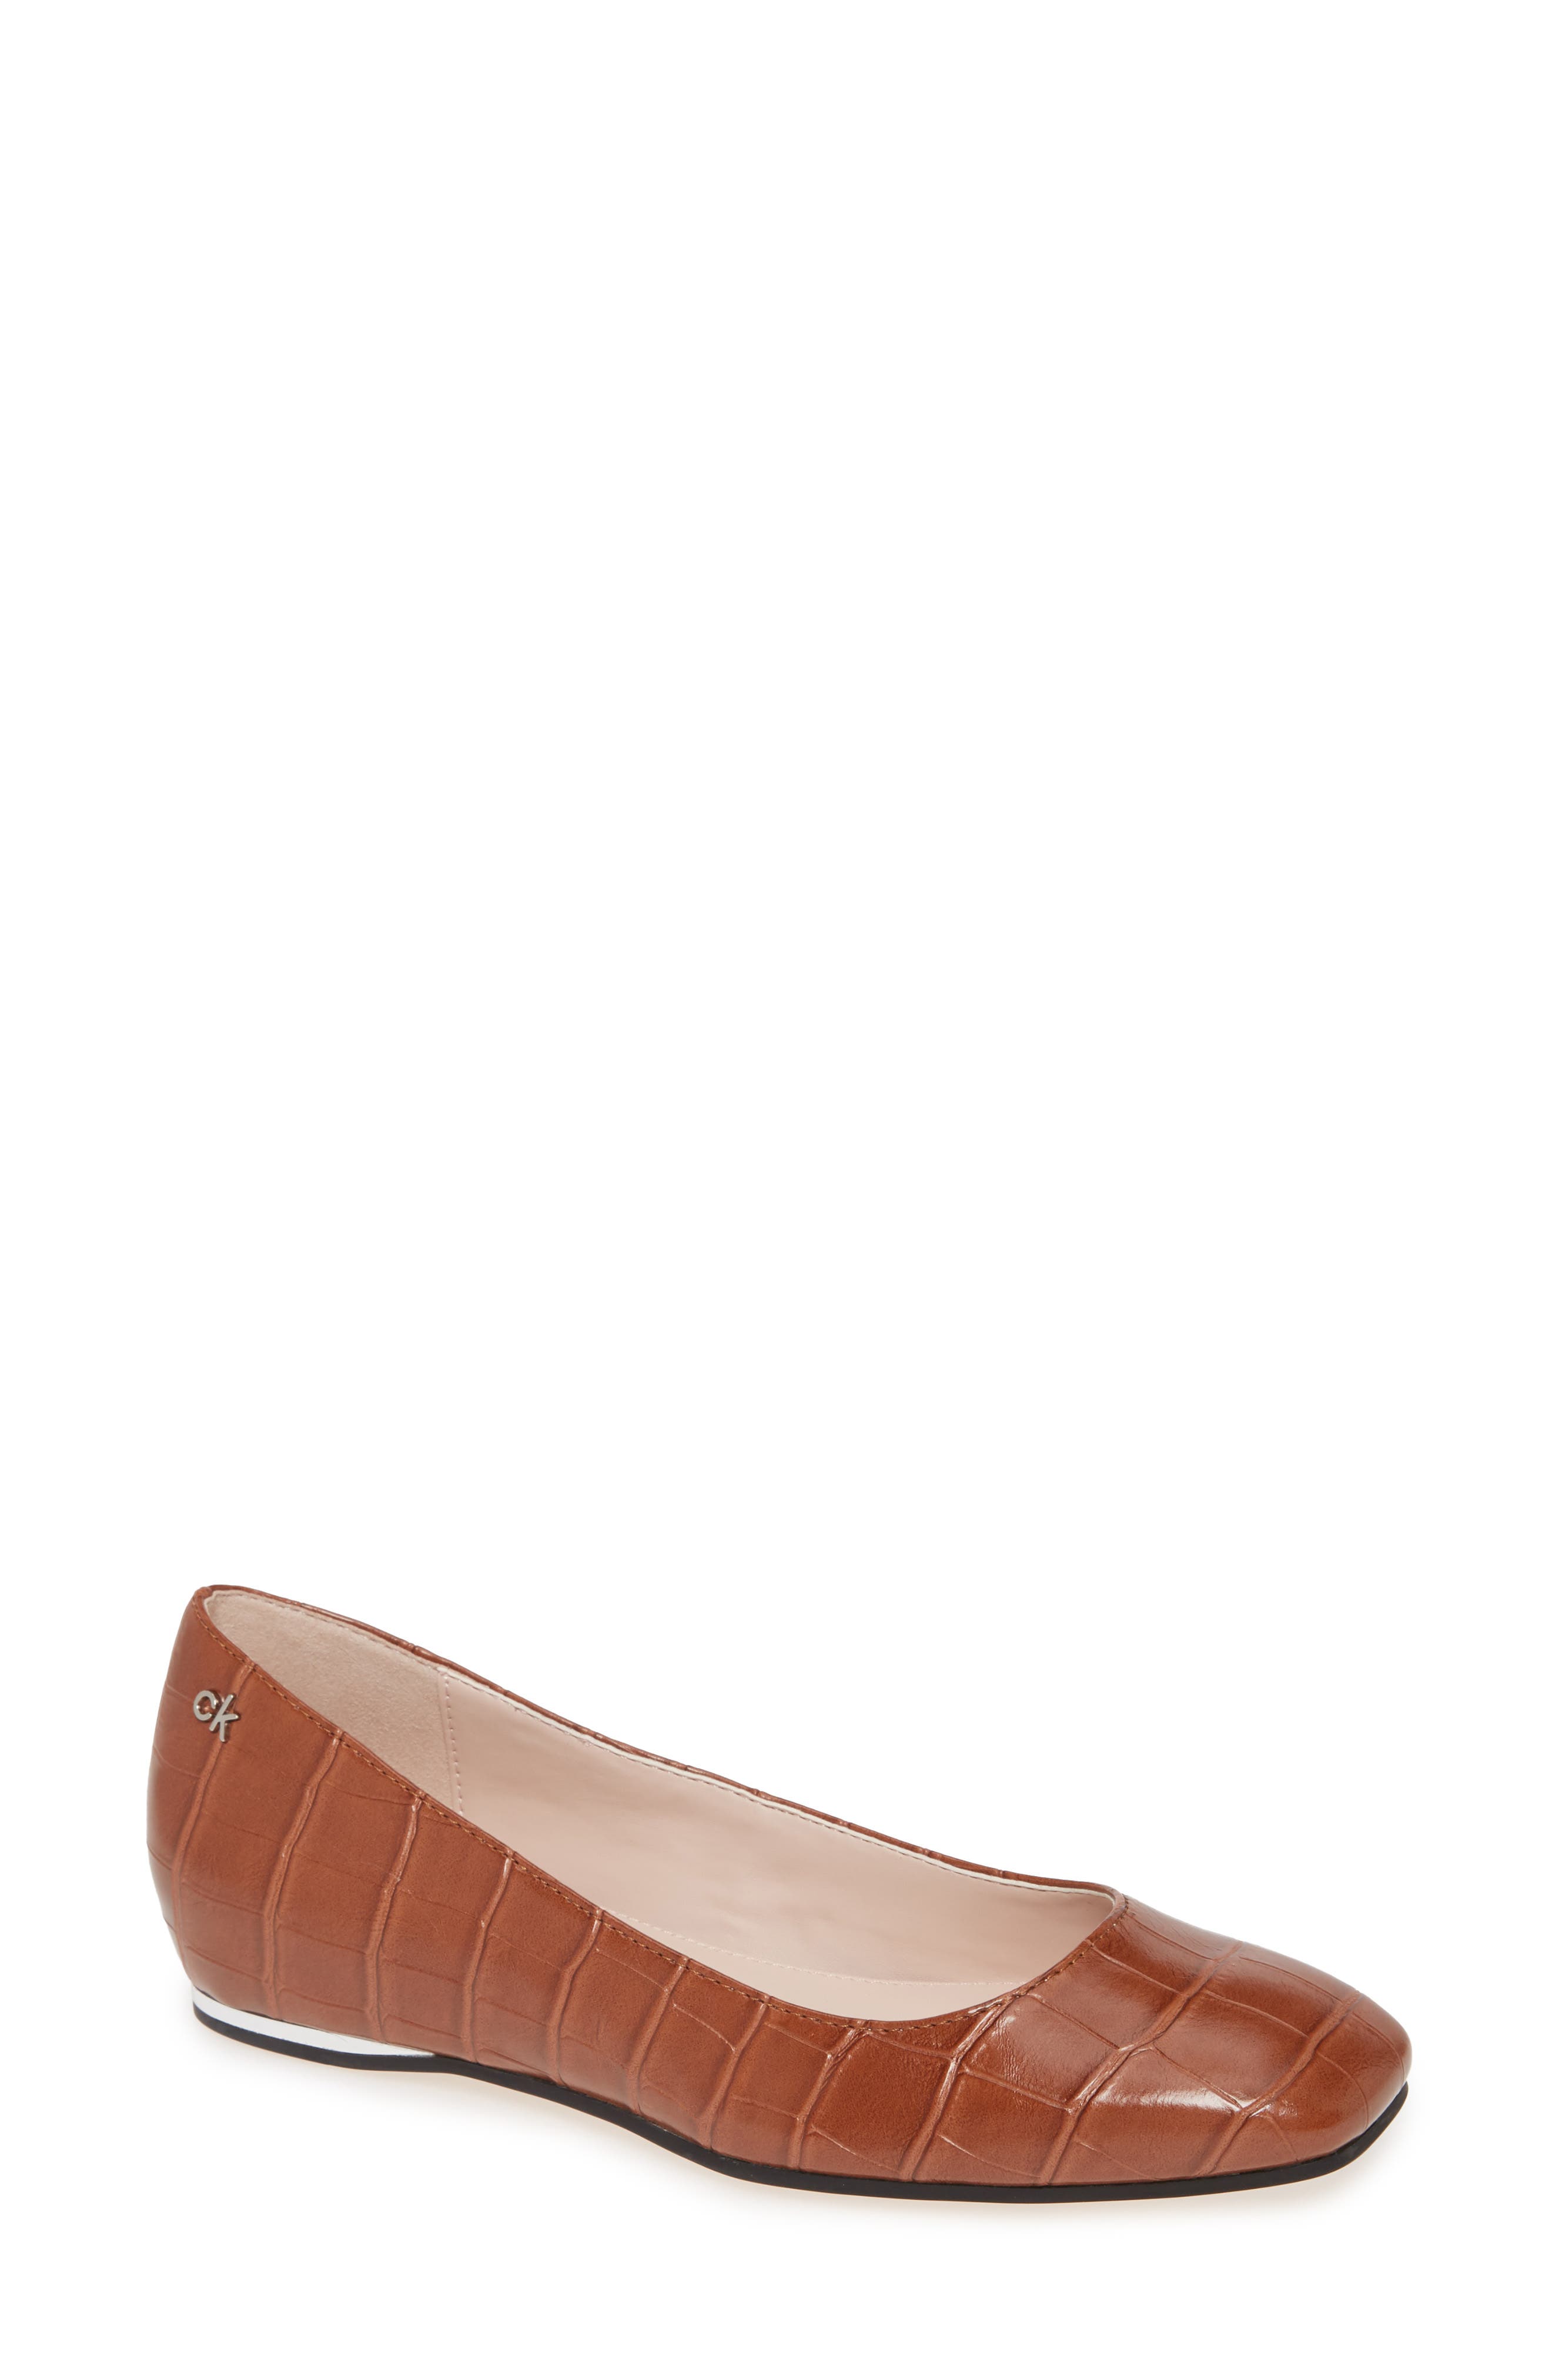 UPC 194060228914 product image for Women's Calvin Klein Heidy Skimmer Flat, Size 5 M - Brown | upcitemdb.com